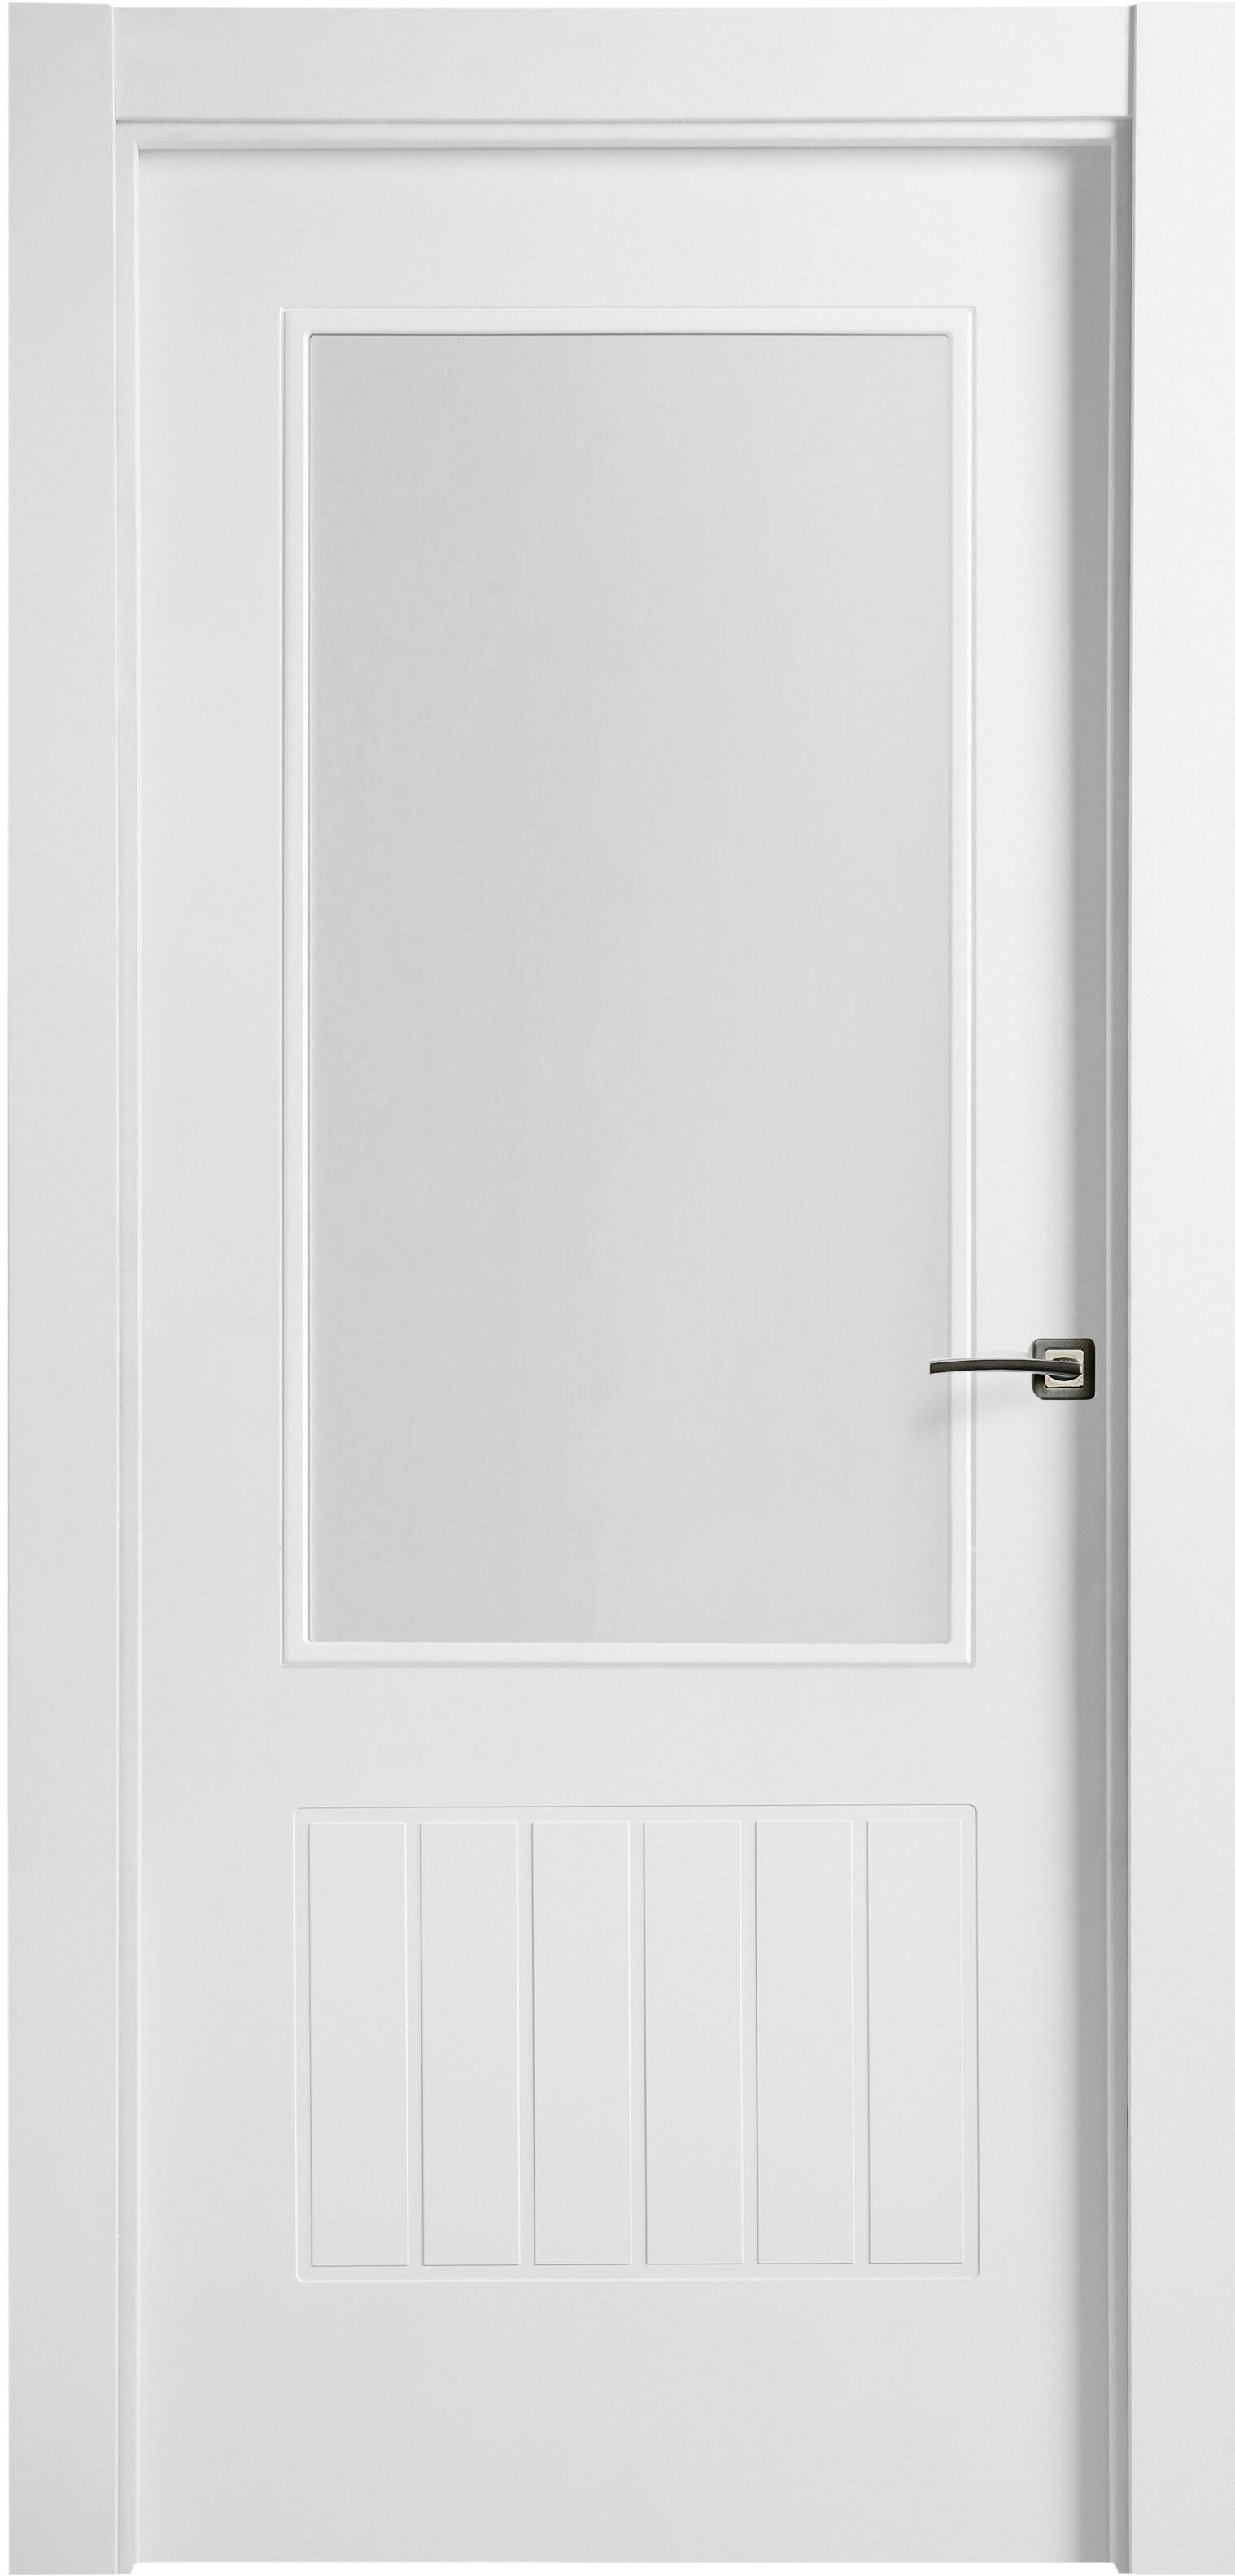 Puerta madison plus blanco apertura izquierda con cristal de 11x 72.5 cm